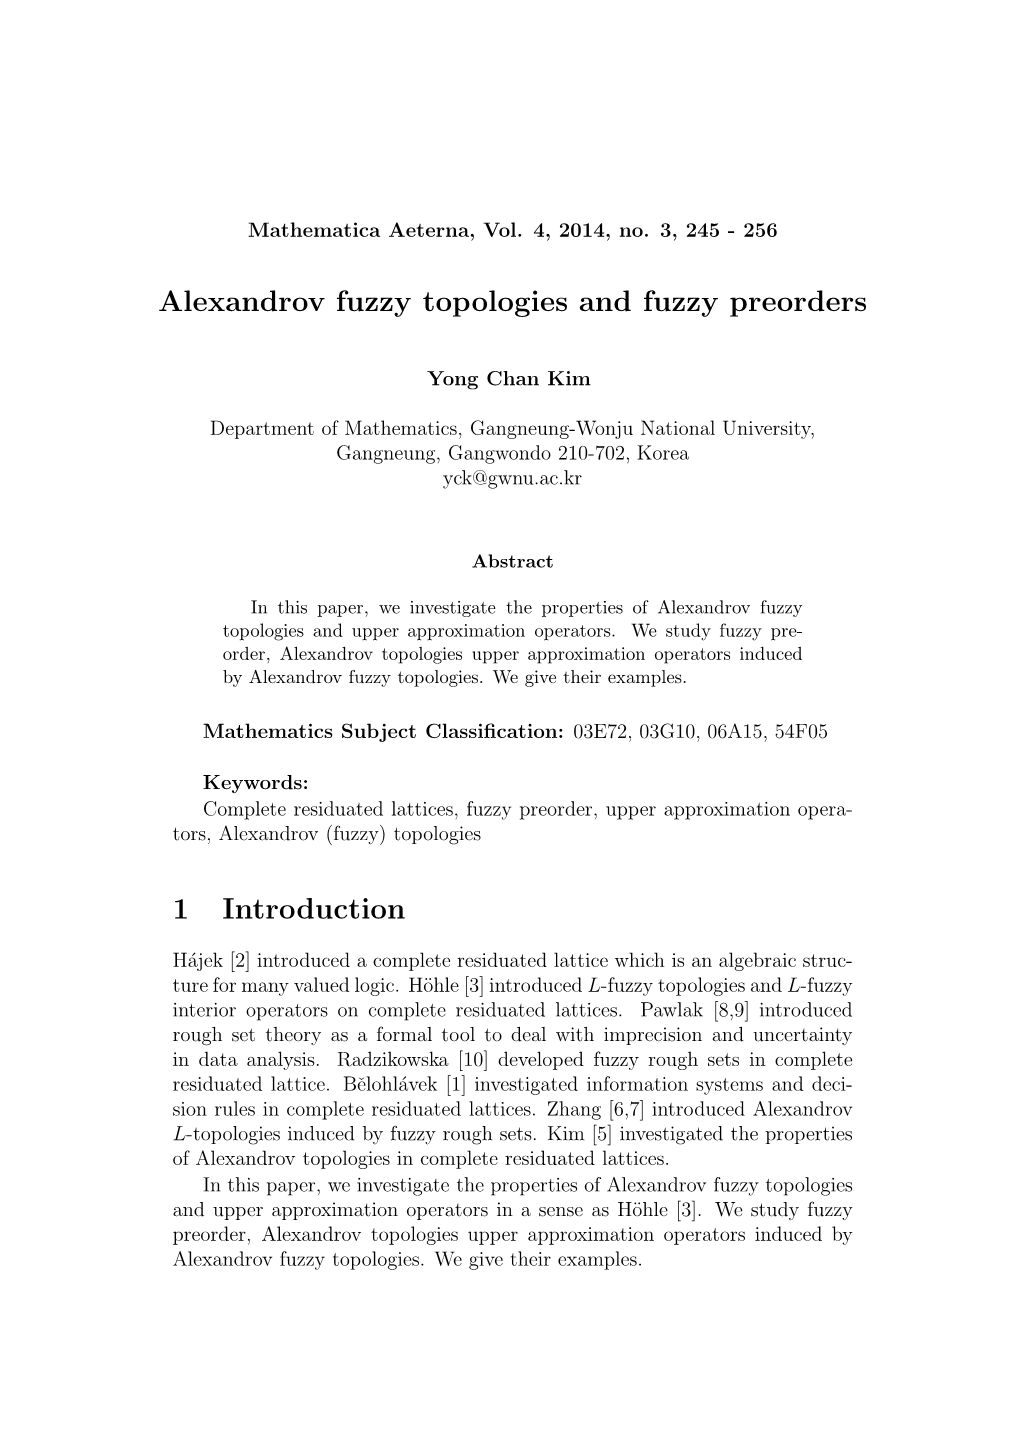 Alexandrov Fuzzy Topologies and Fuzzy Preorders